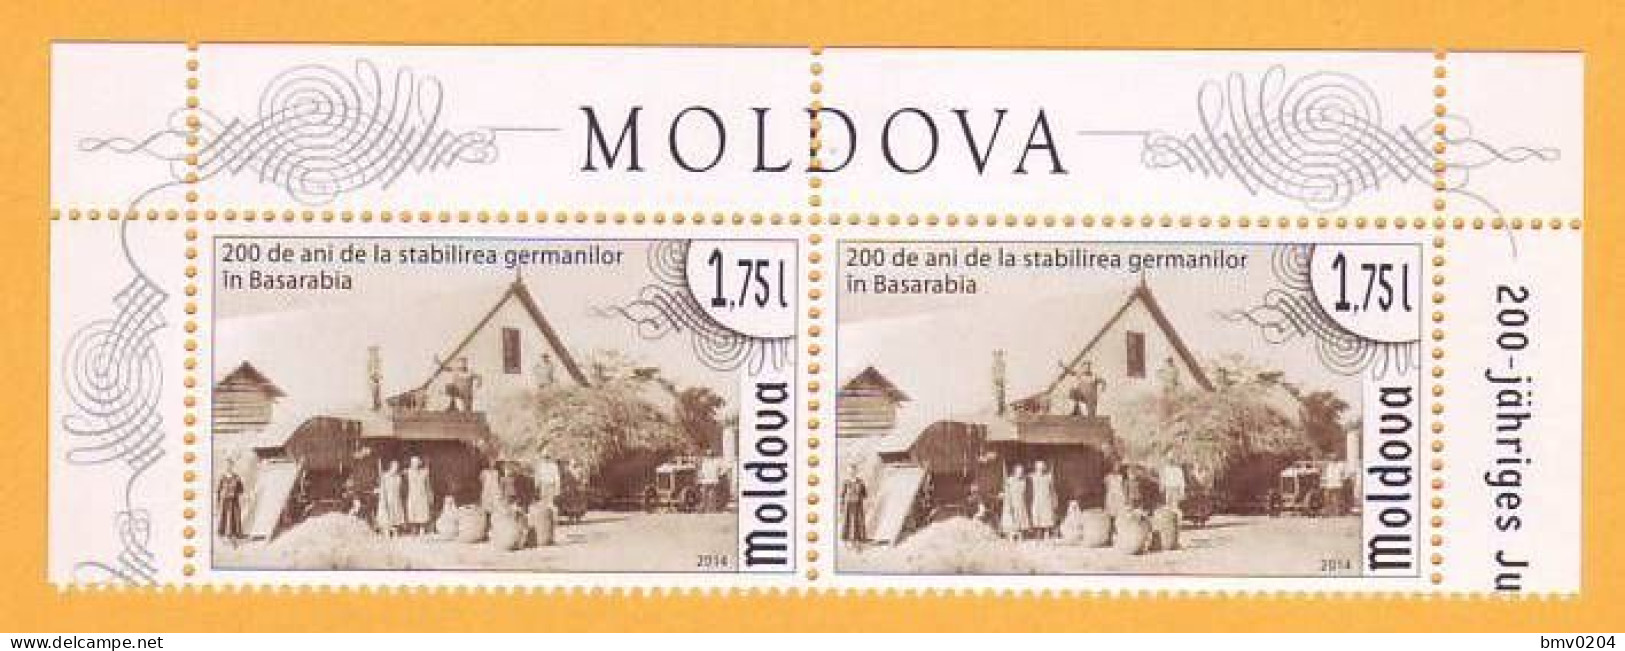 2014 Moldova Moldavie Moldau 200 Years Of Germans In Basarabia Bessarabia. Germany 2v Mint - Moldova